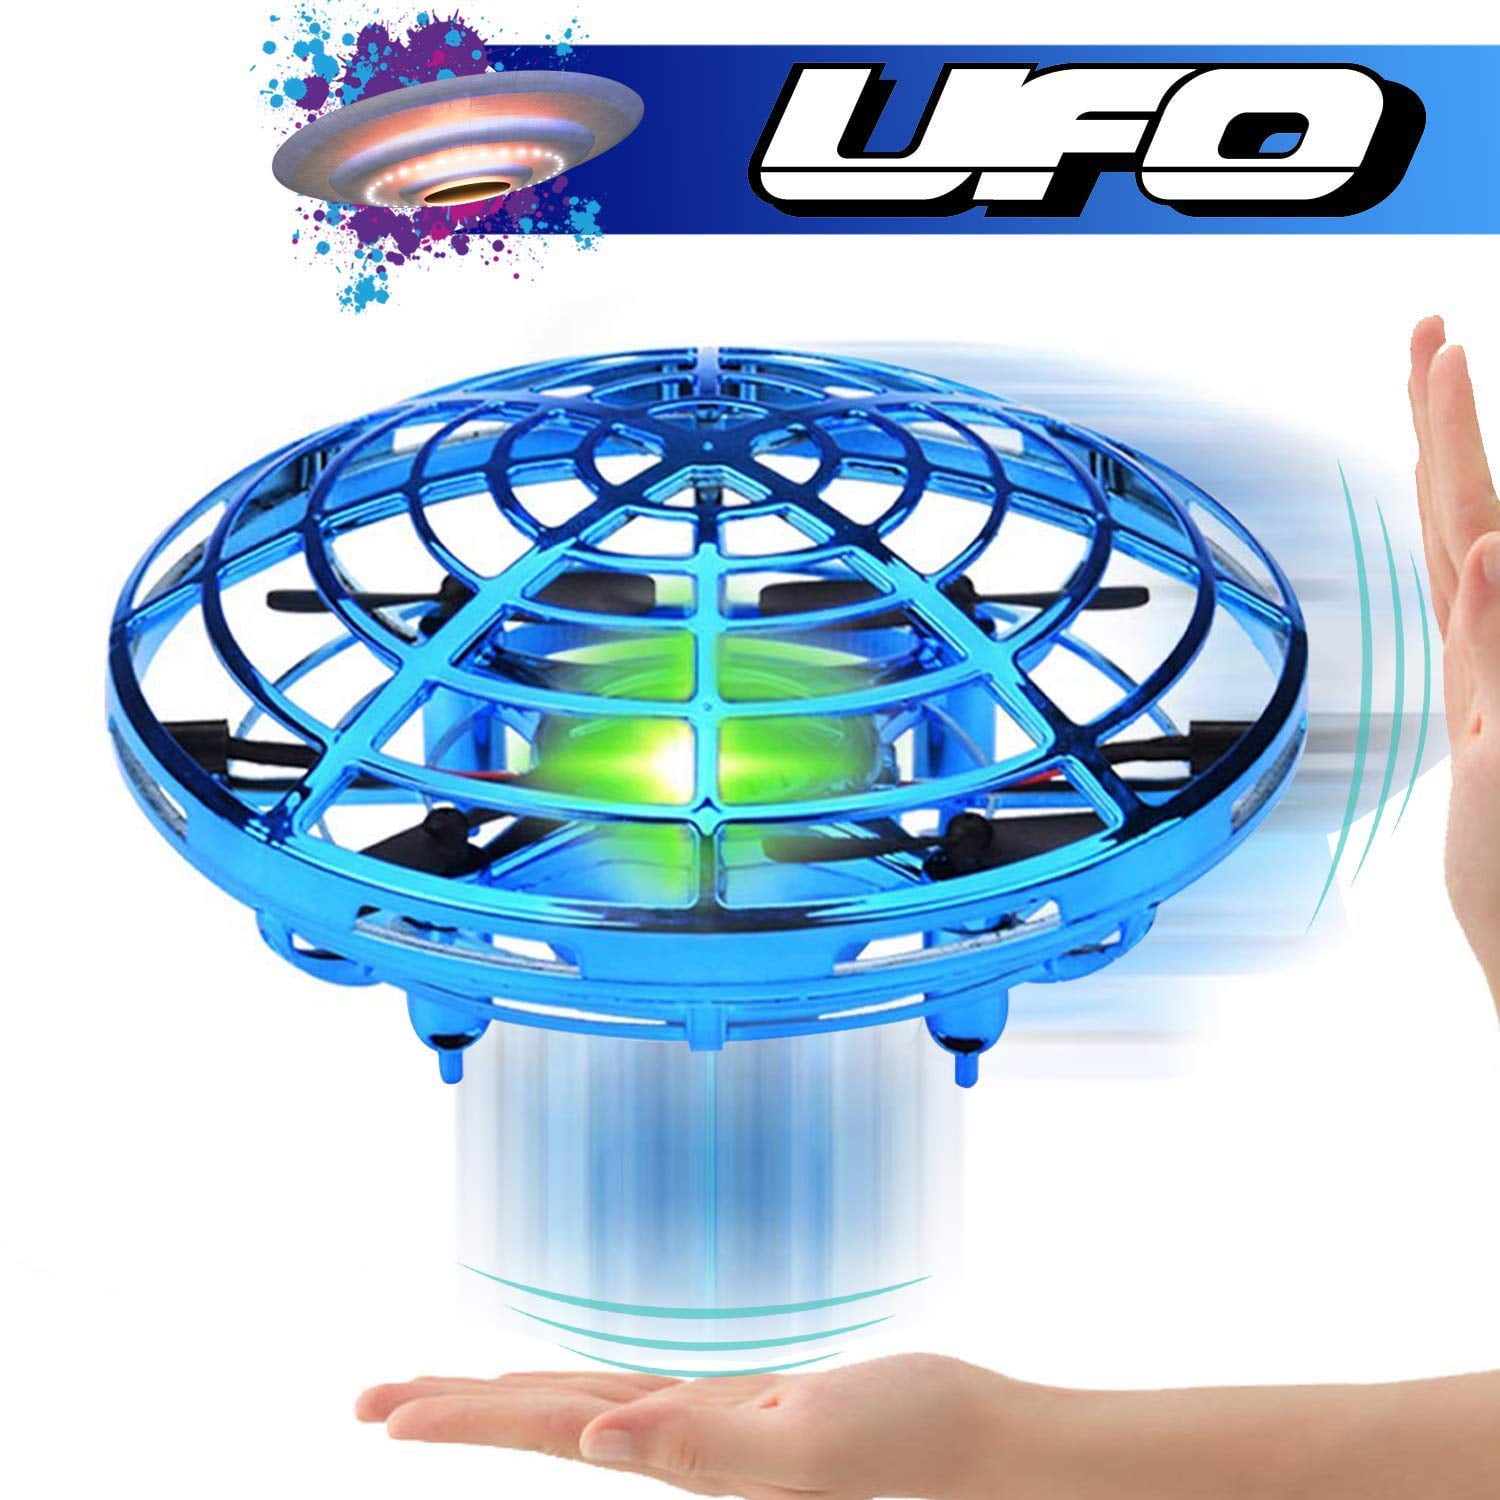 ufo toy video